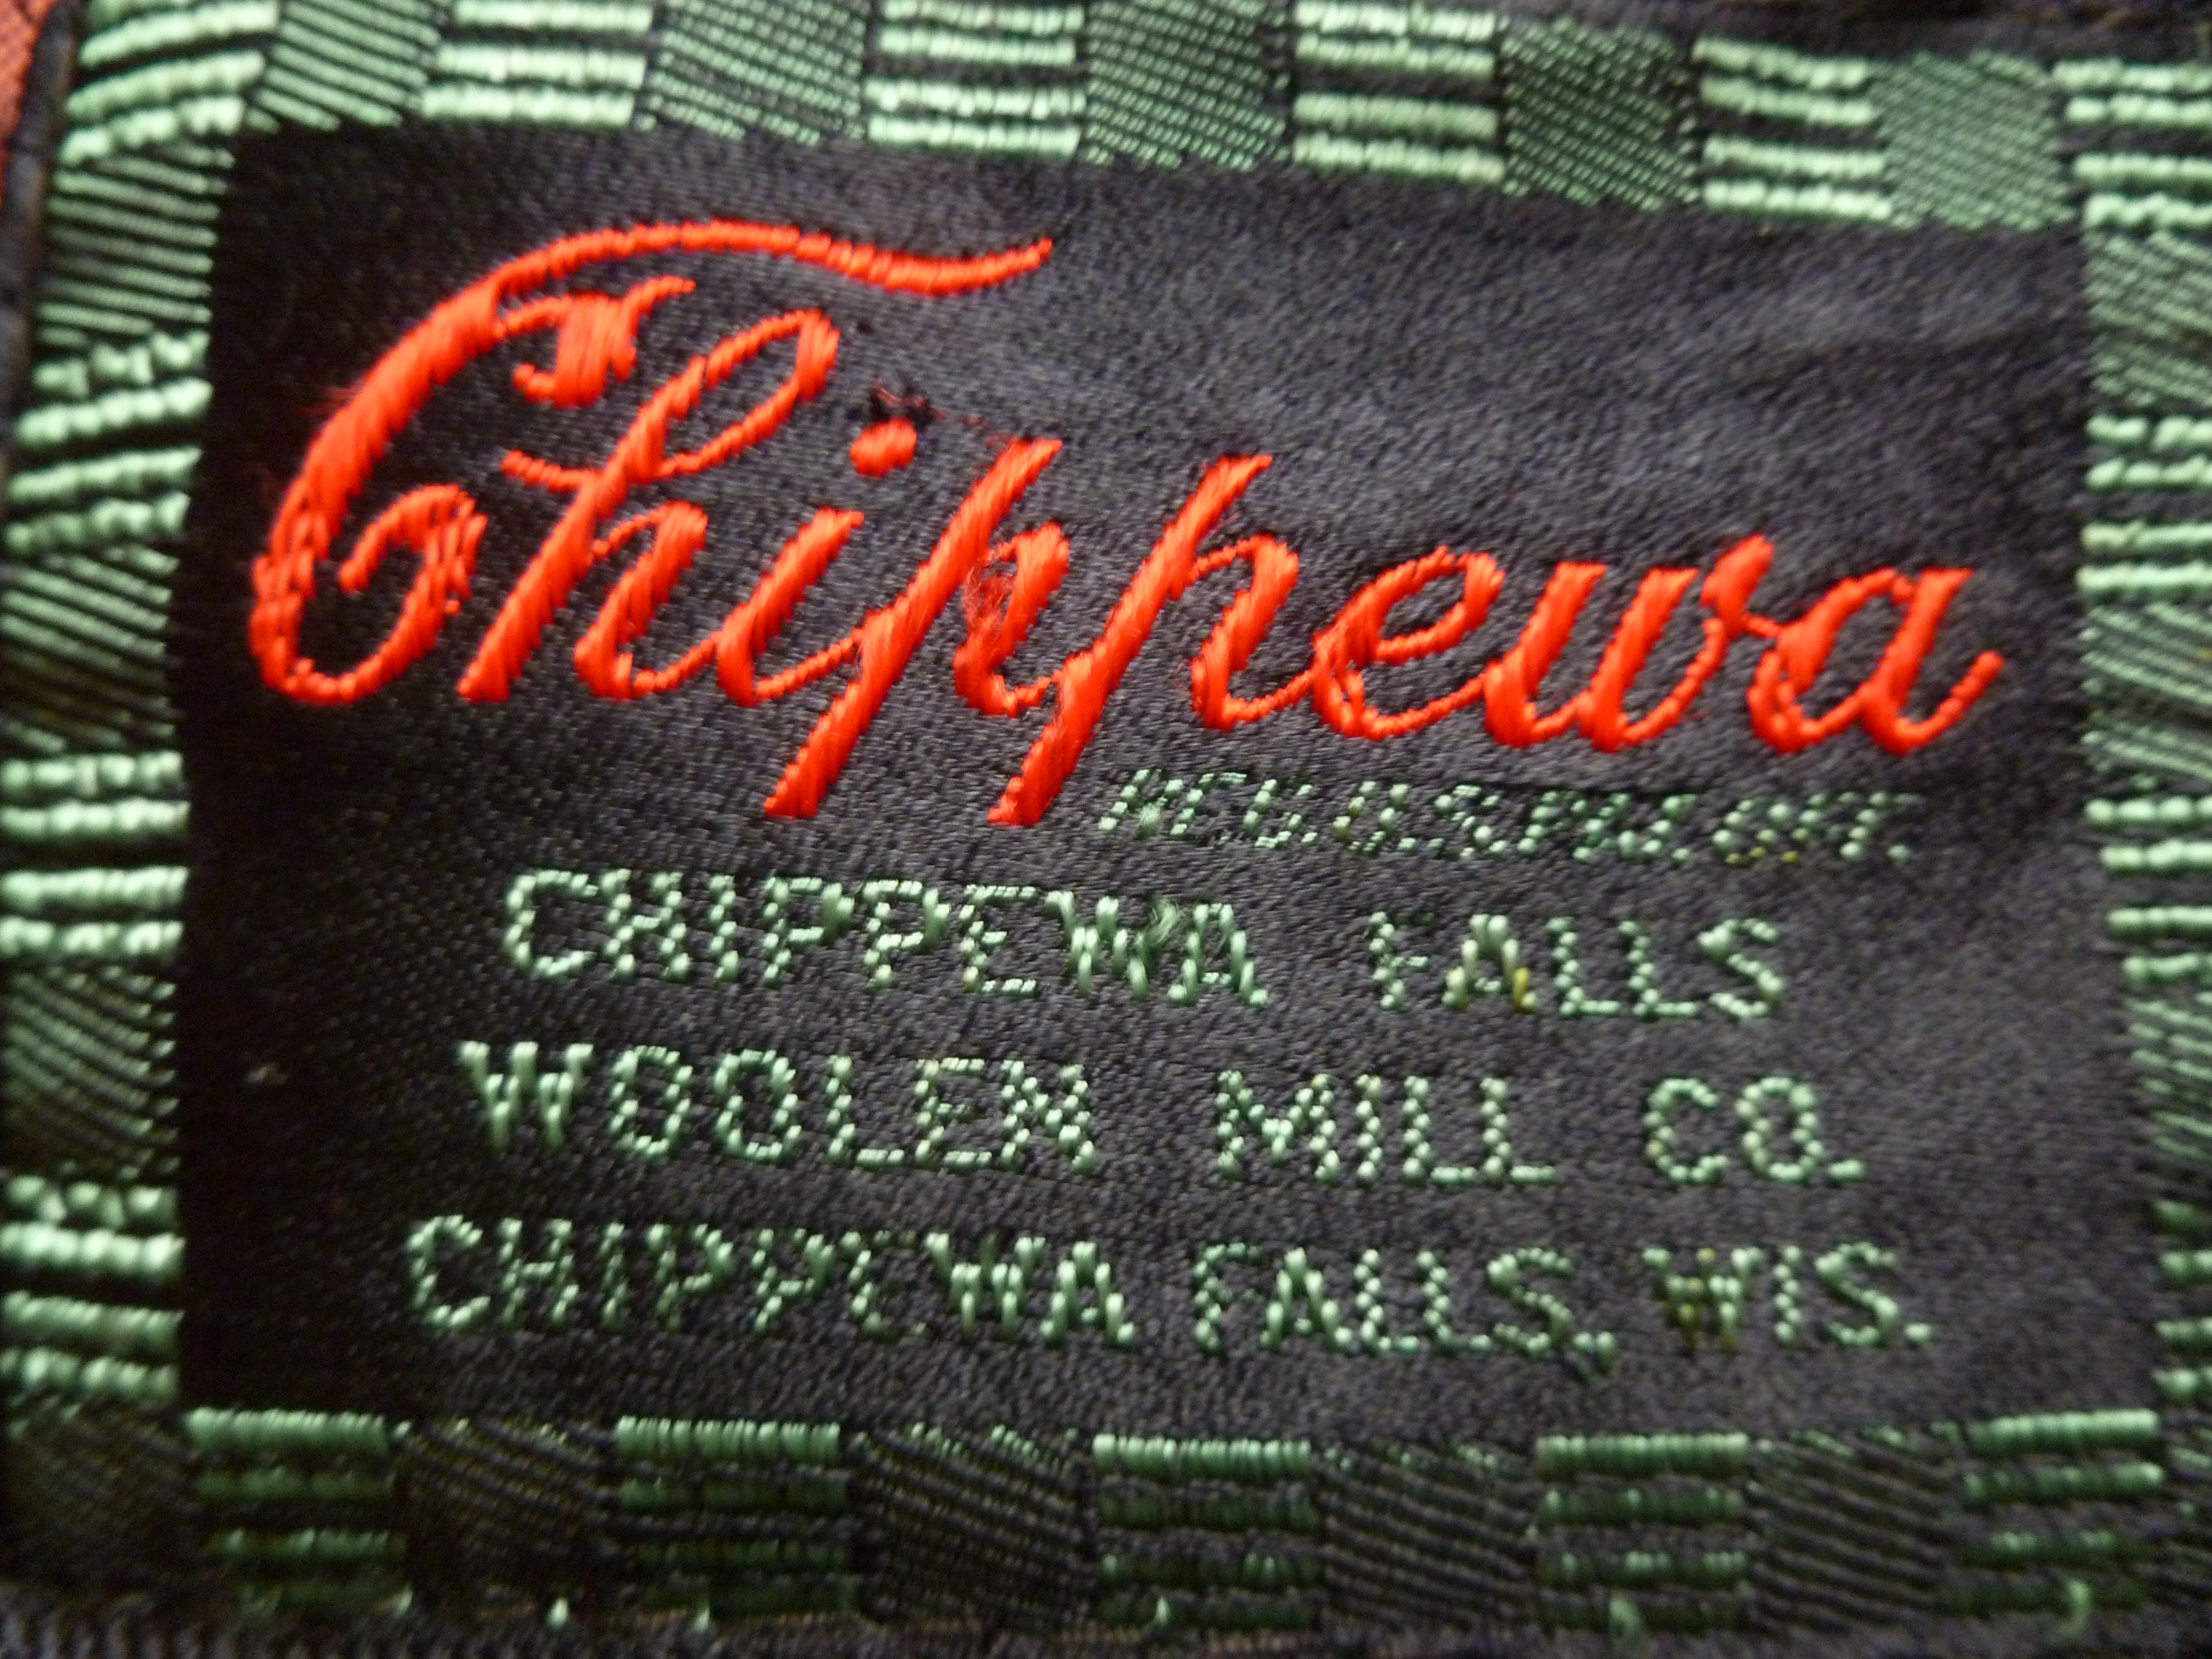  Chippewa Clothes